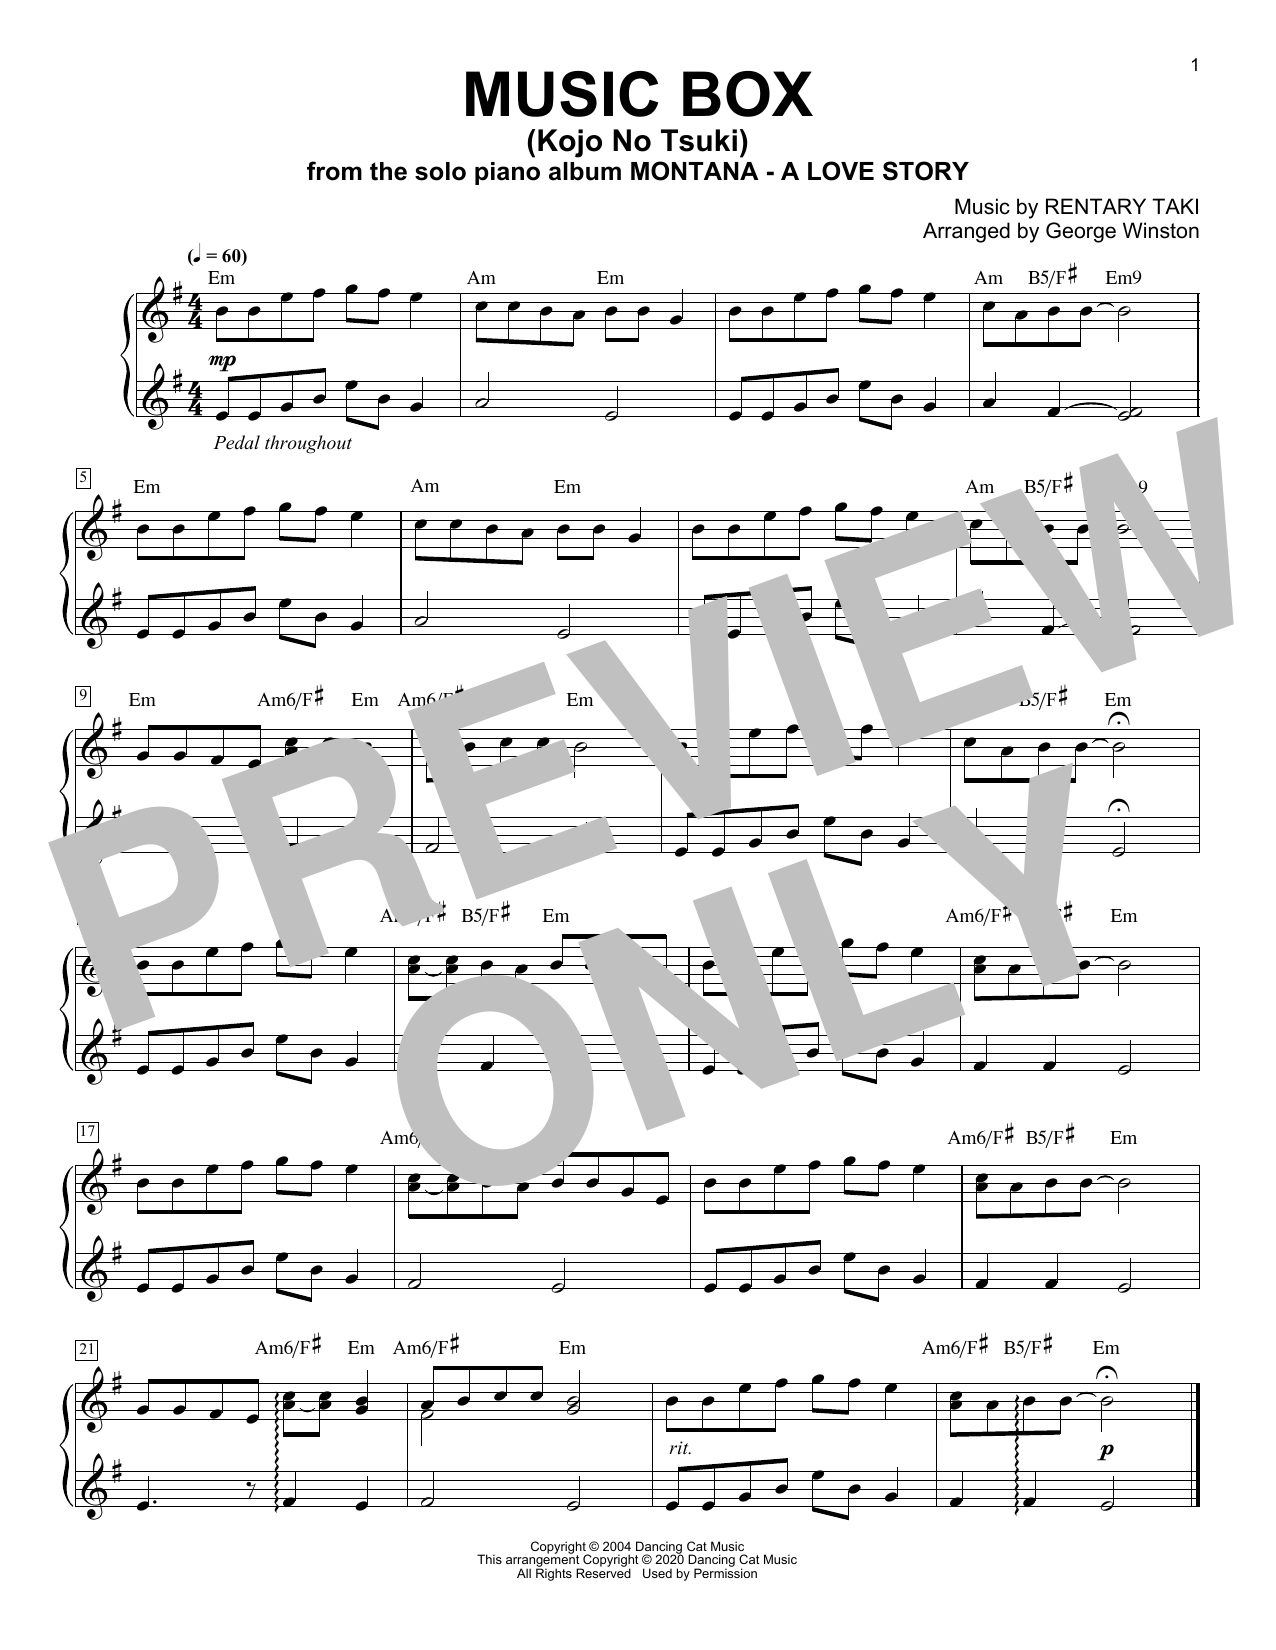 George Winston Music Box (Kojo No Tsuki) Sheet Music Notes & Chords for Piano Solo - Download or Print PDF